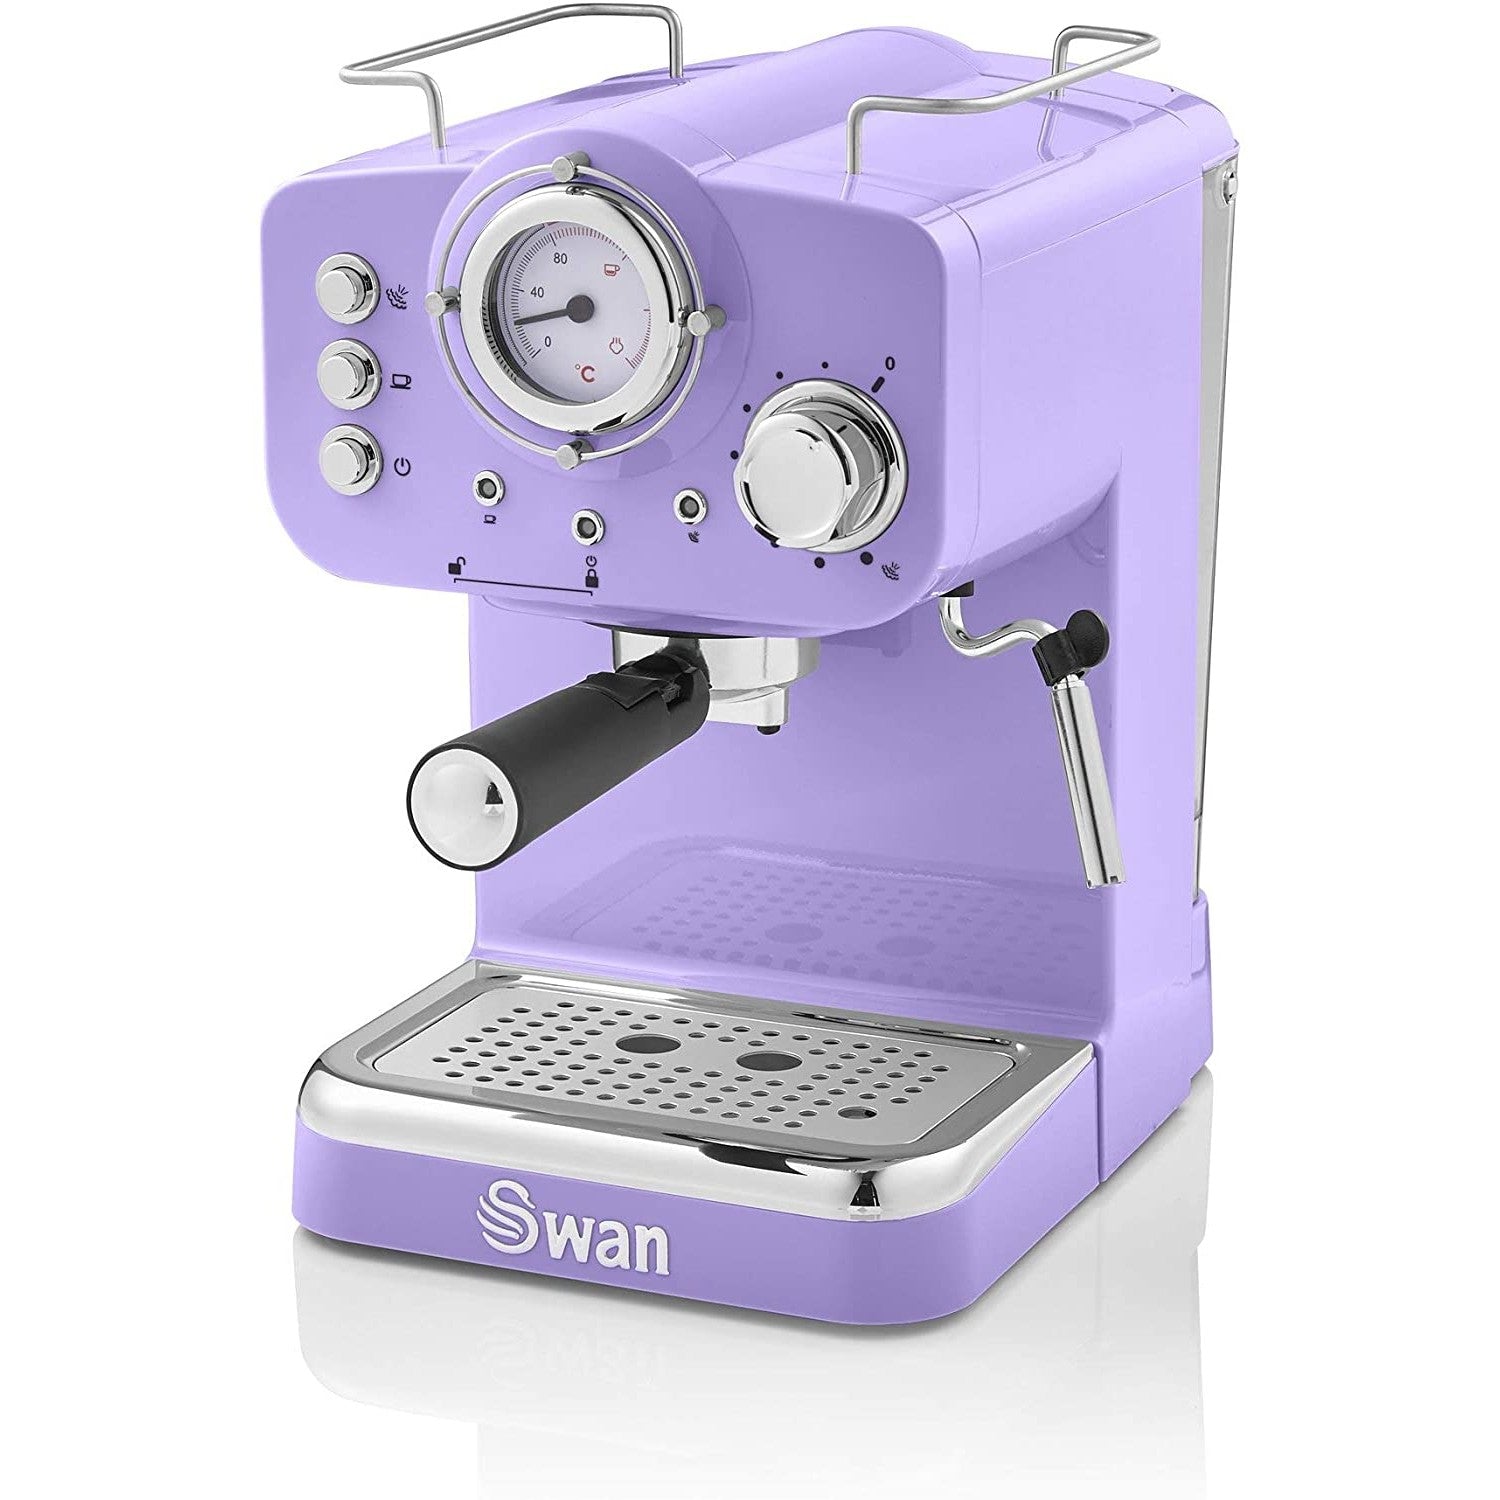 1100W Swan Retro Pump Espresso Coffee Machine